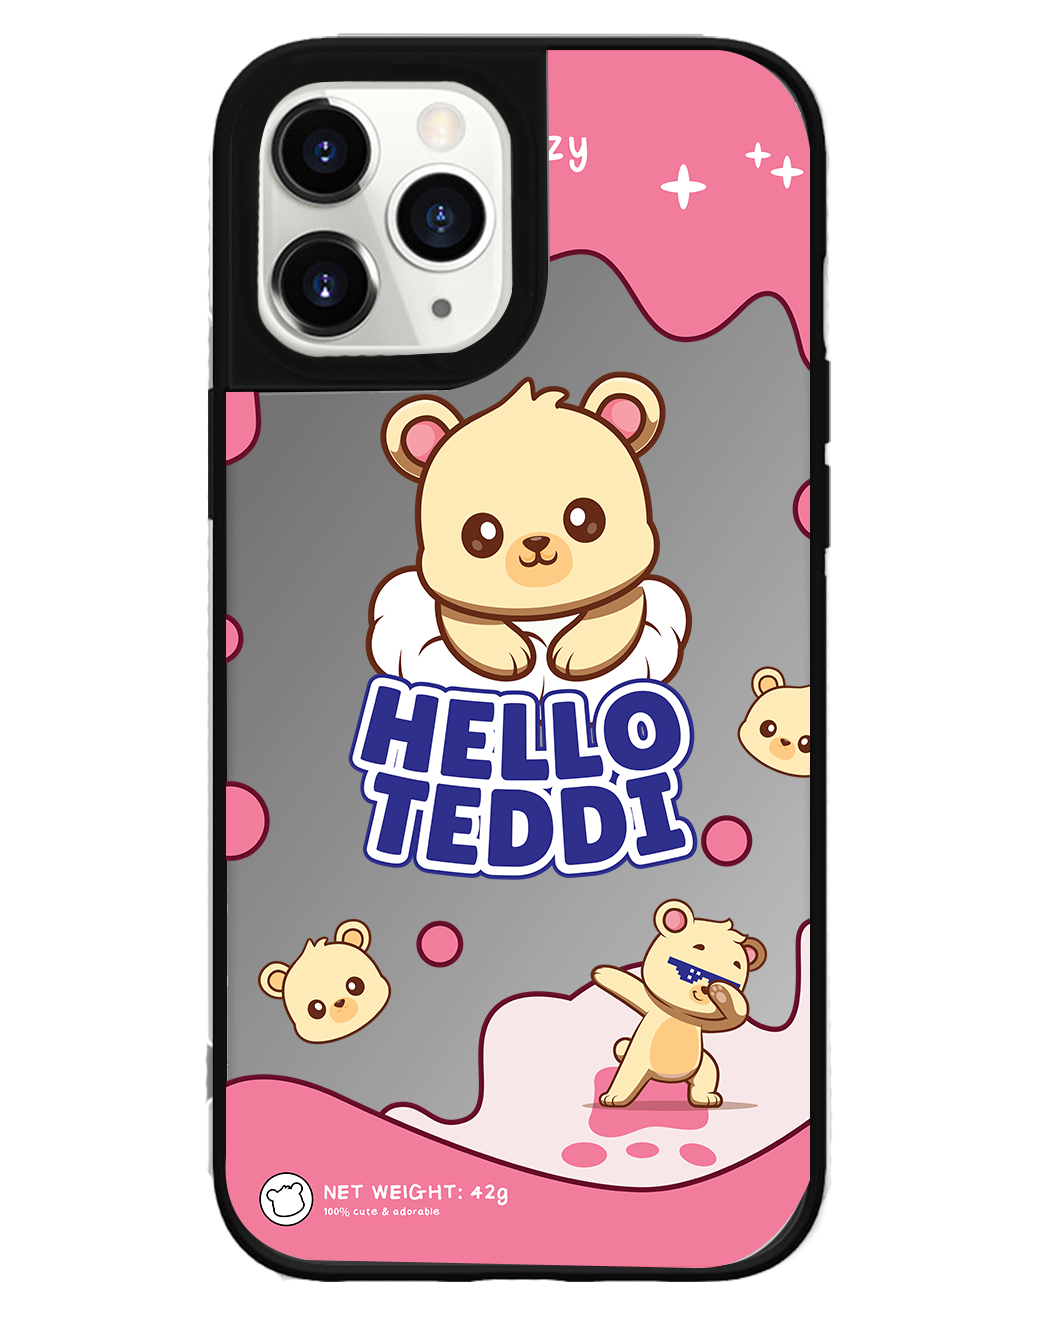 iPhone Mirror Grip Case - Hello Teddy 2.0